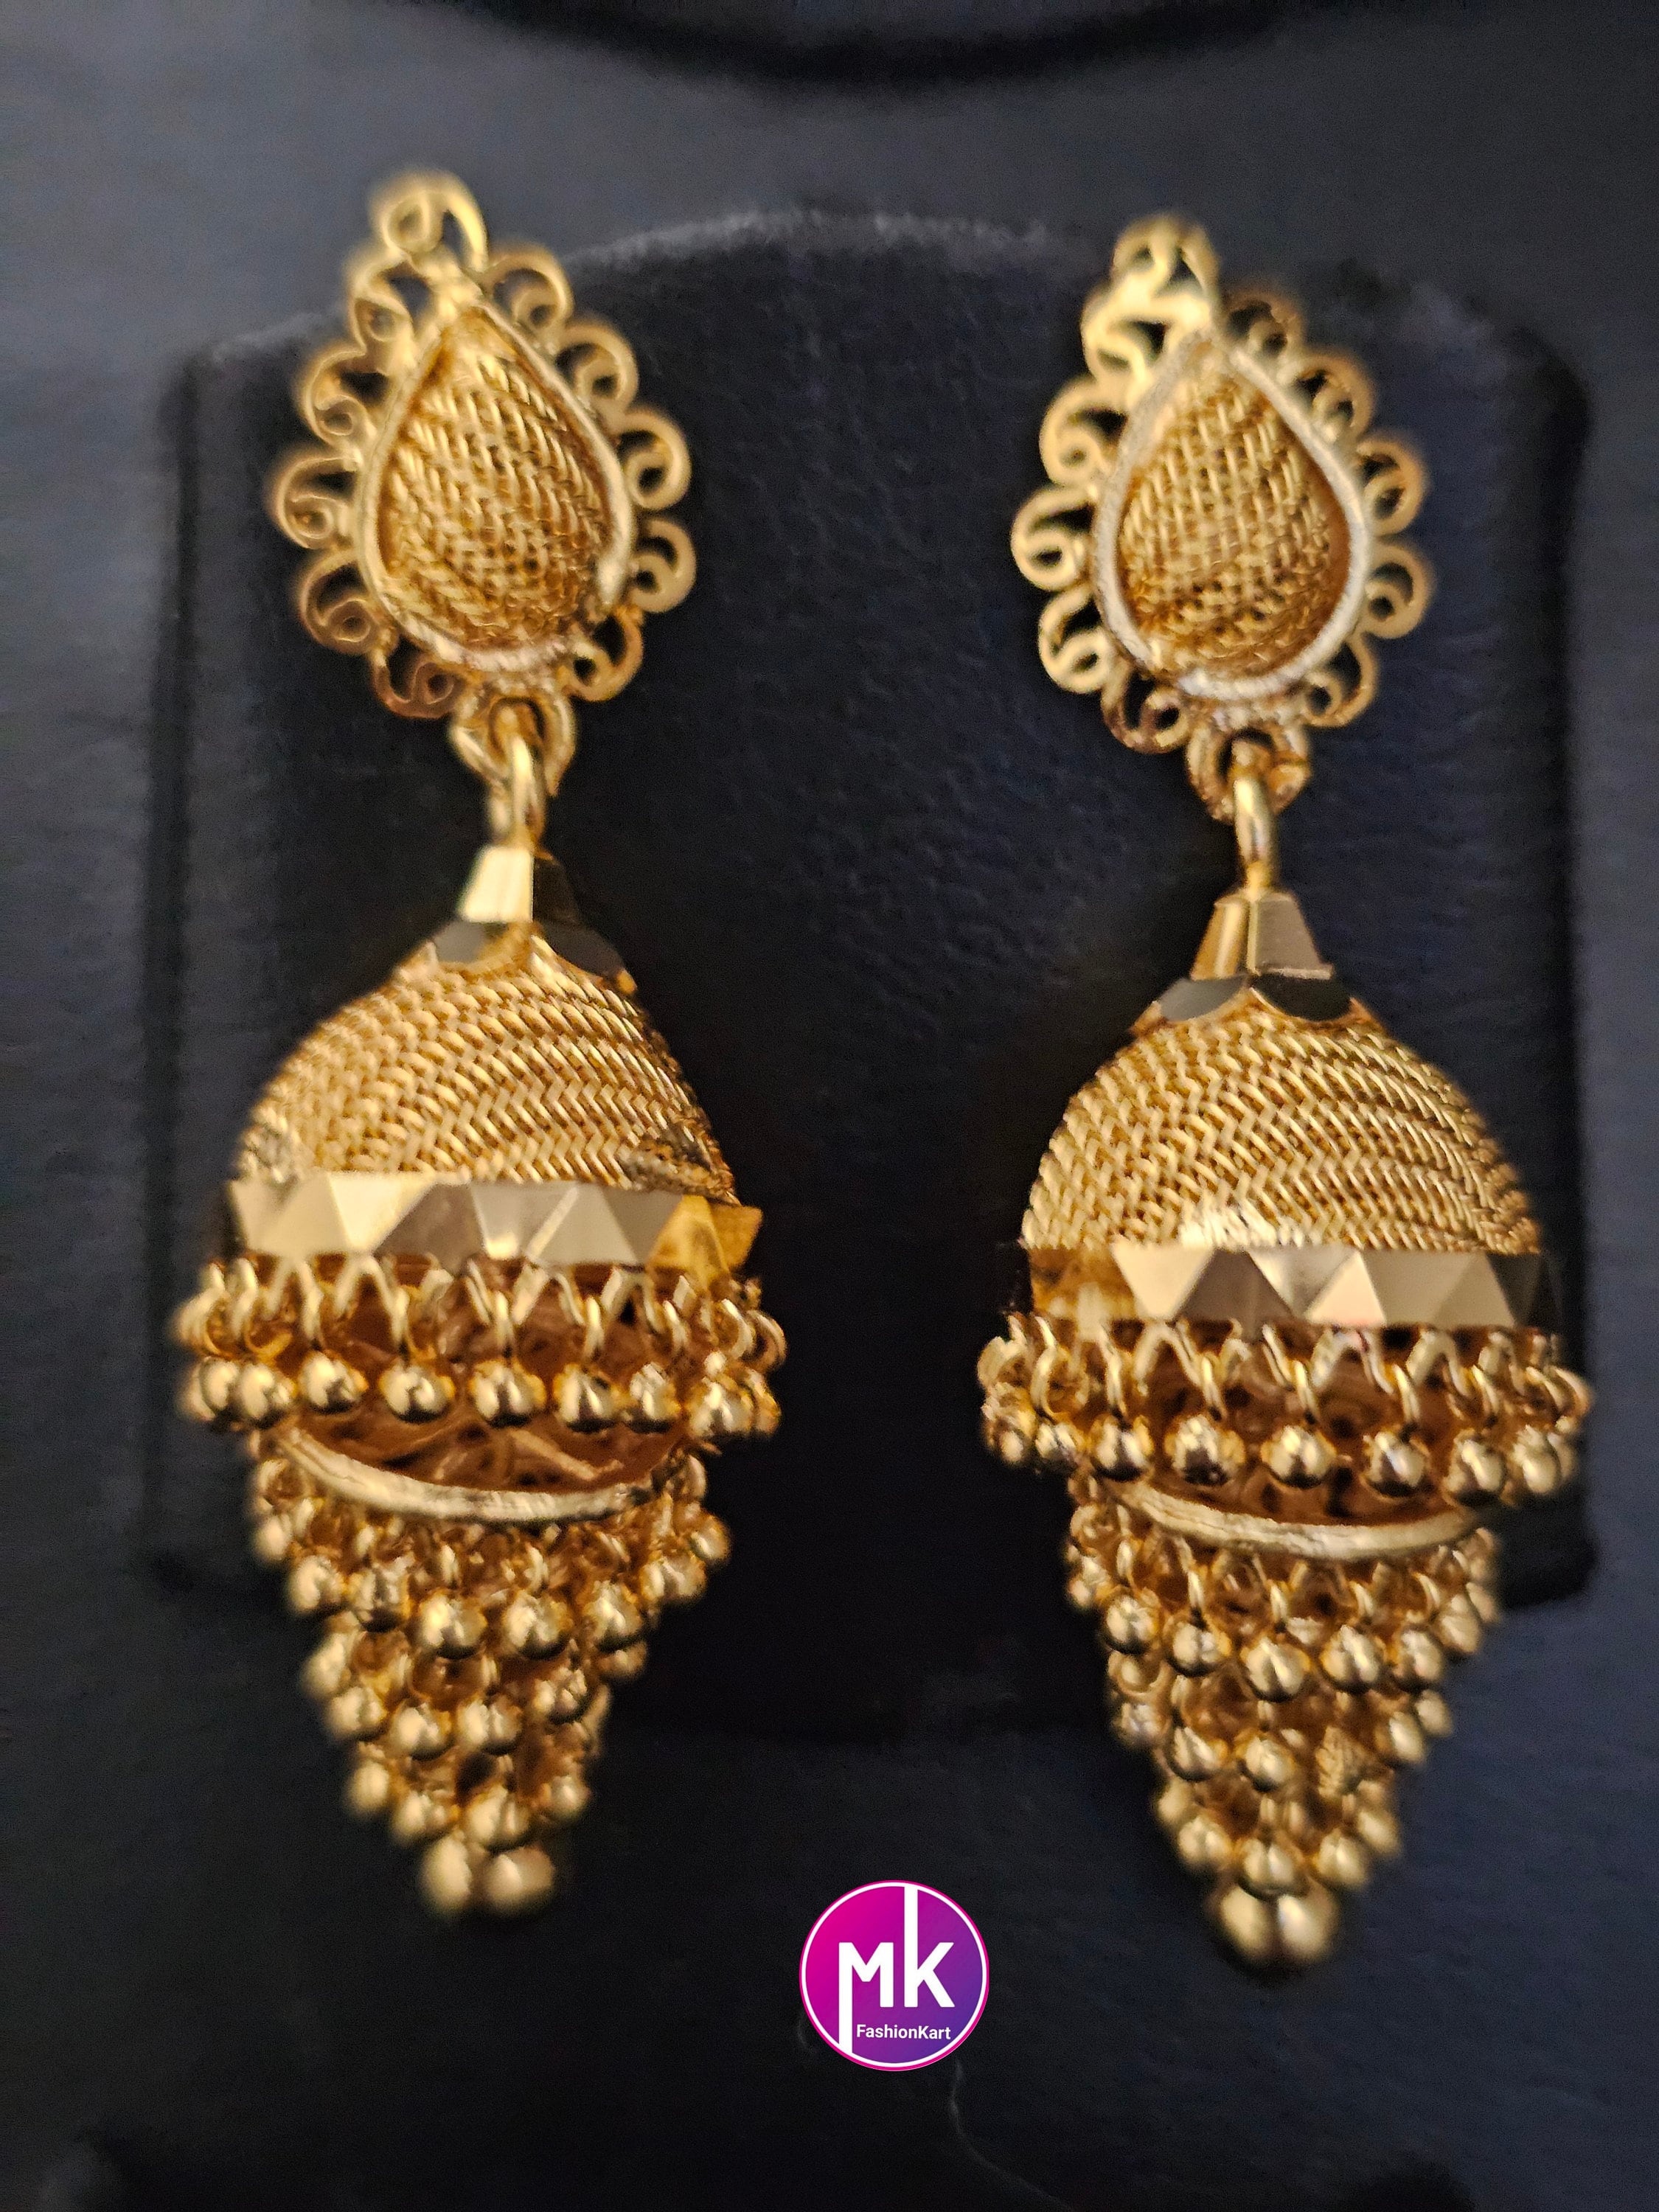 Beautiful Gold finish Multi-layer Jhumka with hanging gold beads